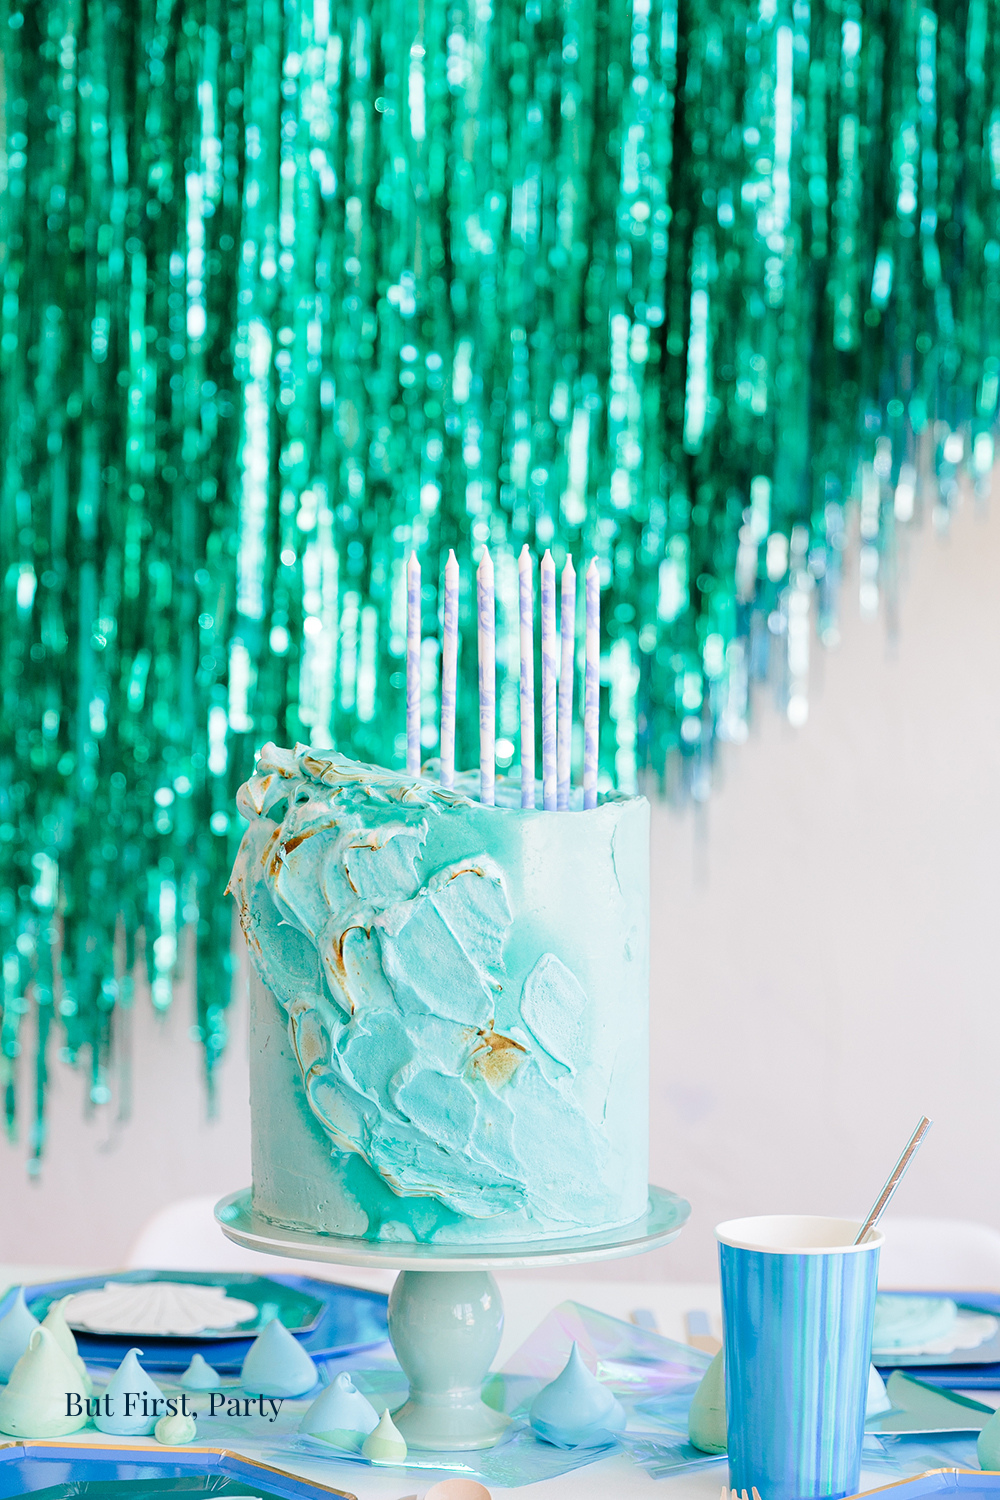 Shark party birthday cake.